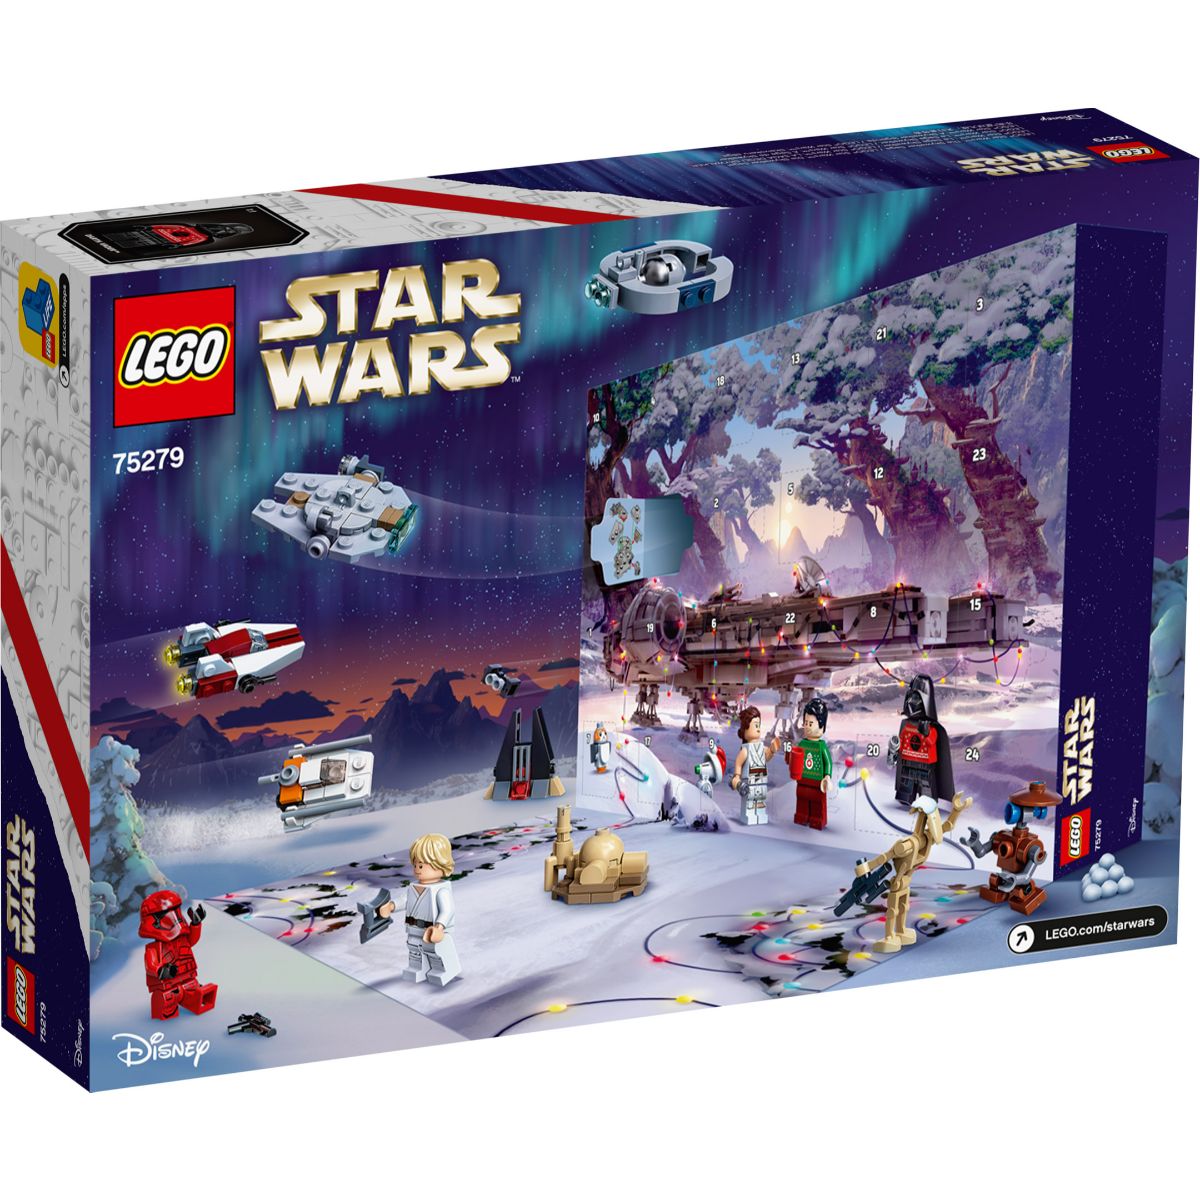 LEGO Star Wars Advent 2020 Calendar Toy Brands LZ Casey's Toys